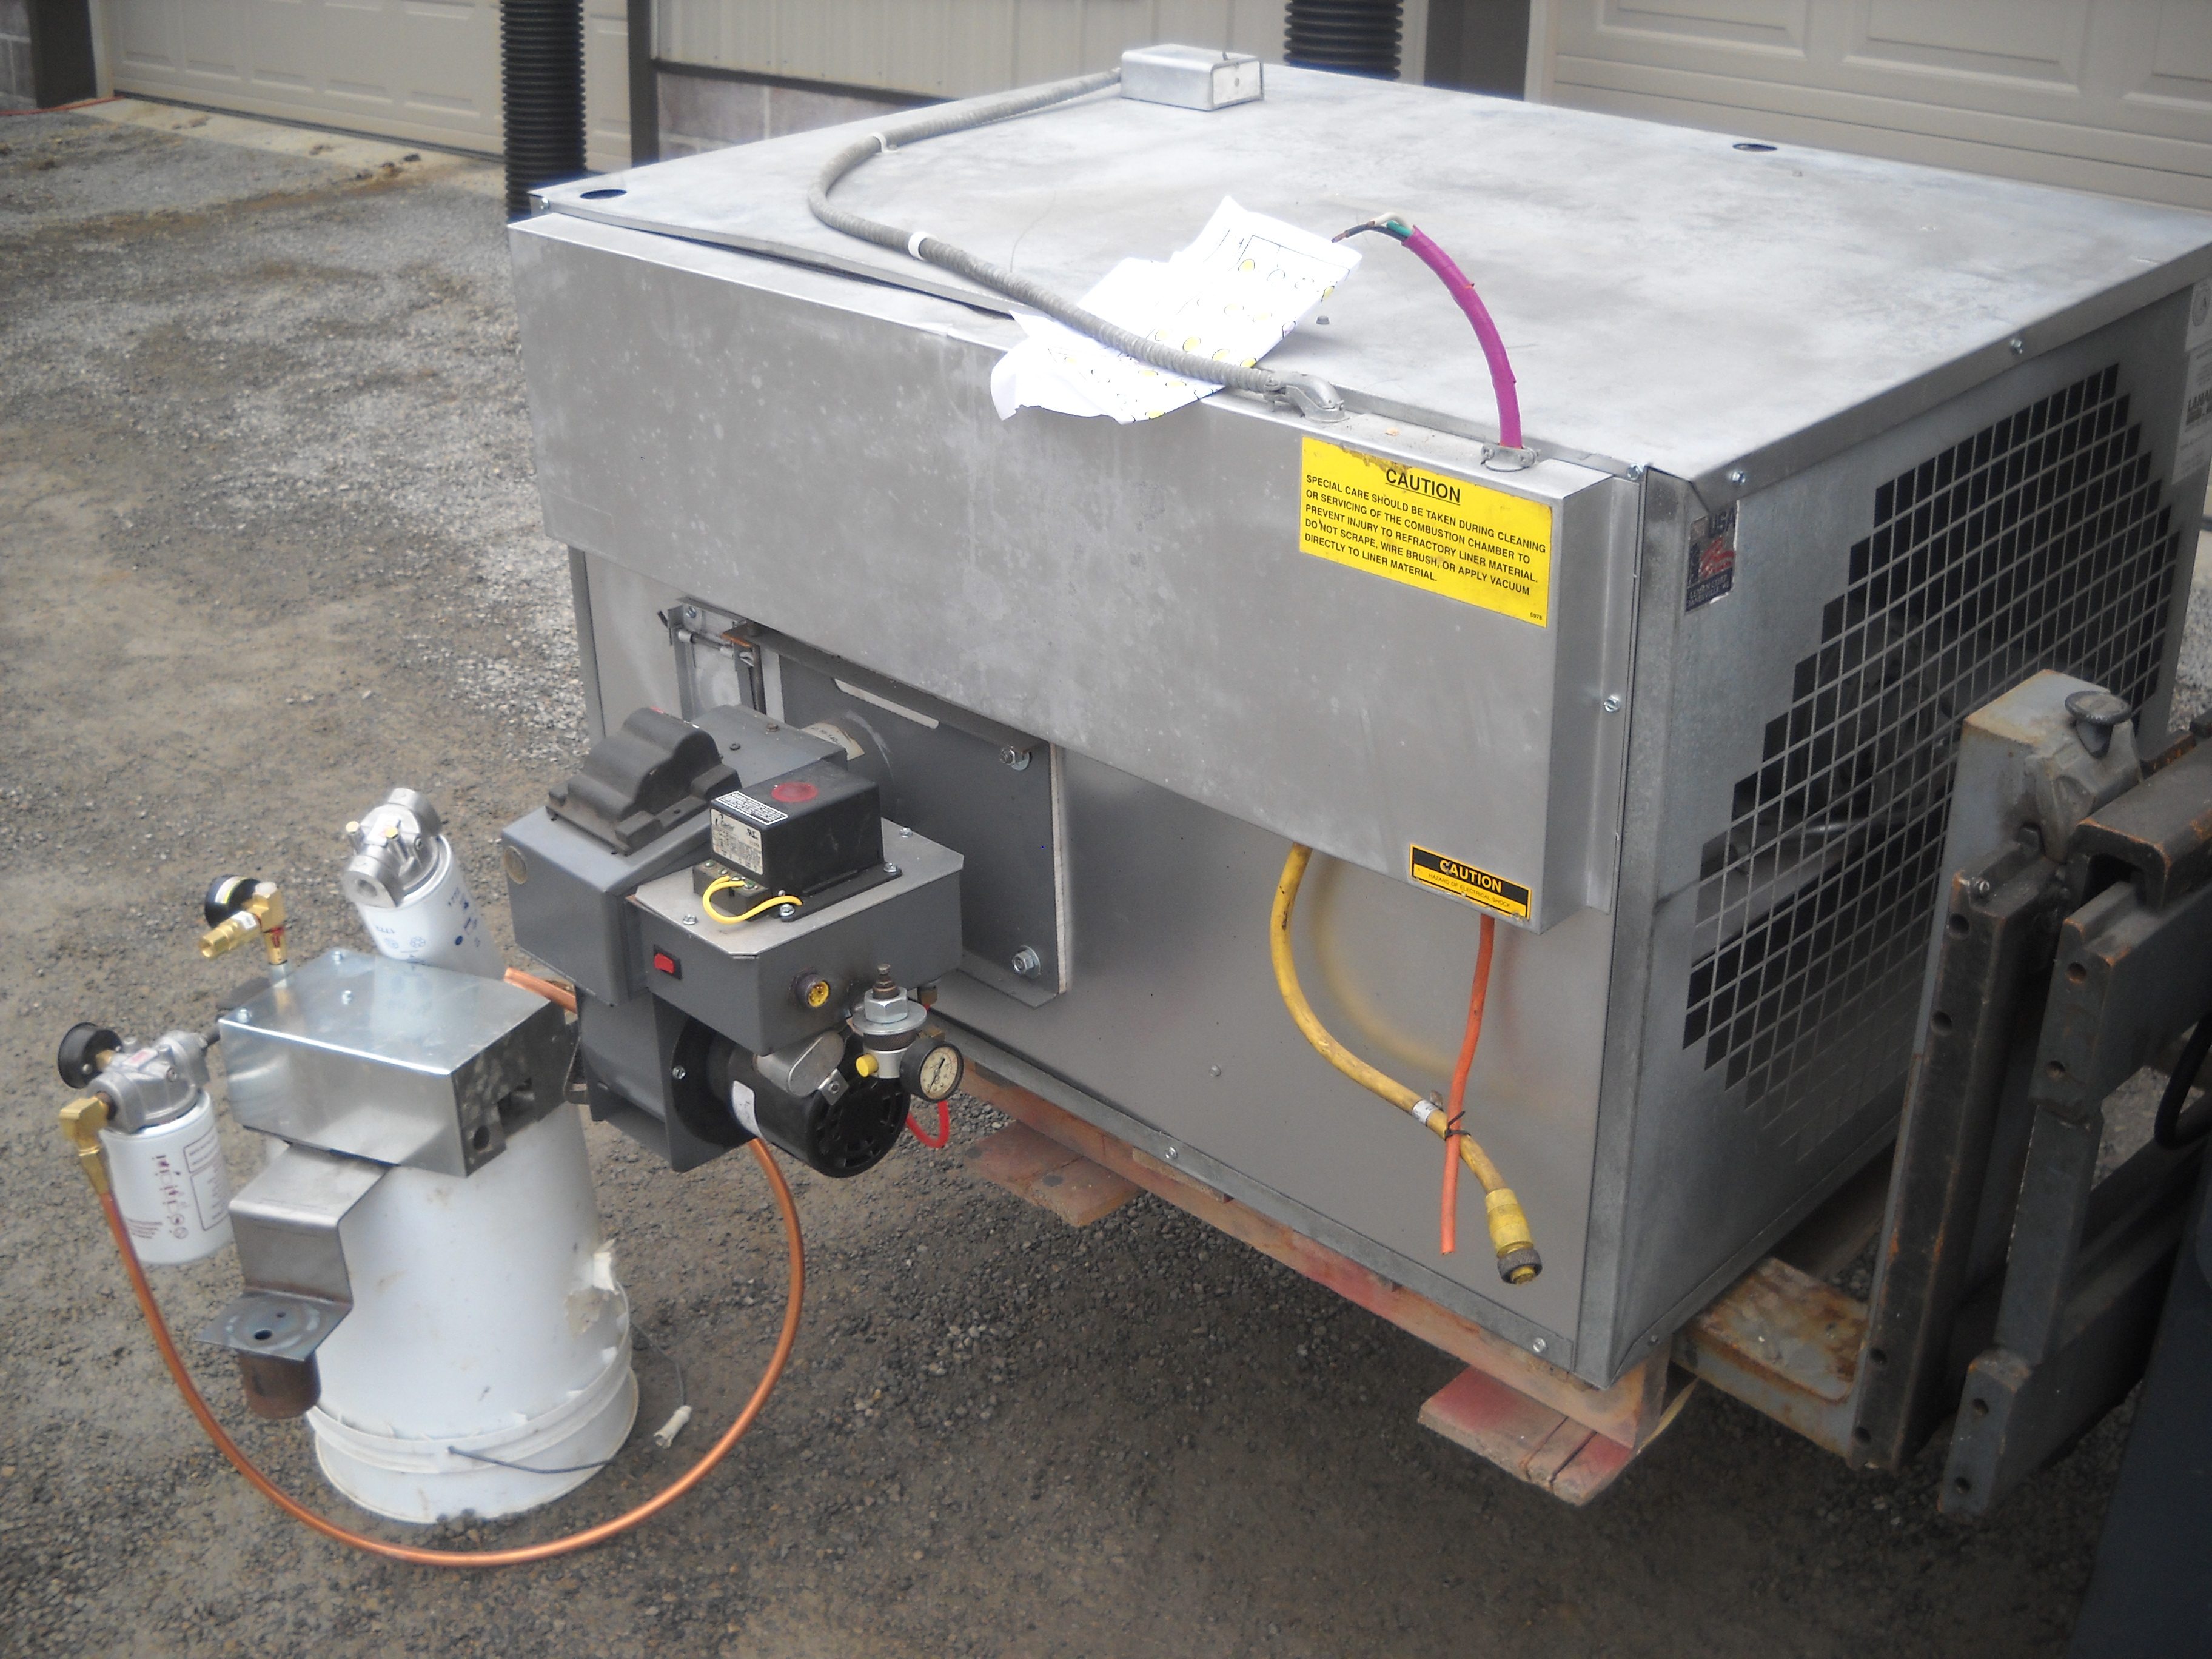 FI,HI MX Lanair 8234 Pump Head Waste Oil Heater Pump ONE YEAR WARRANTY fits CA 